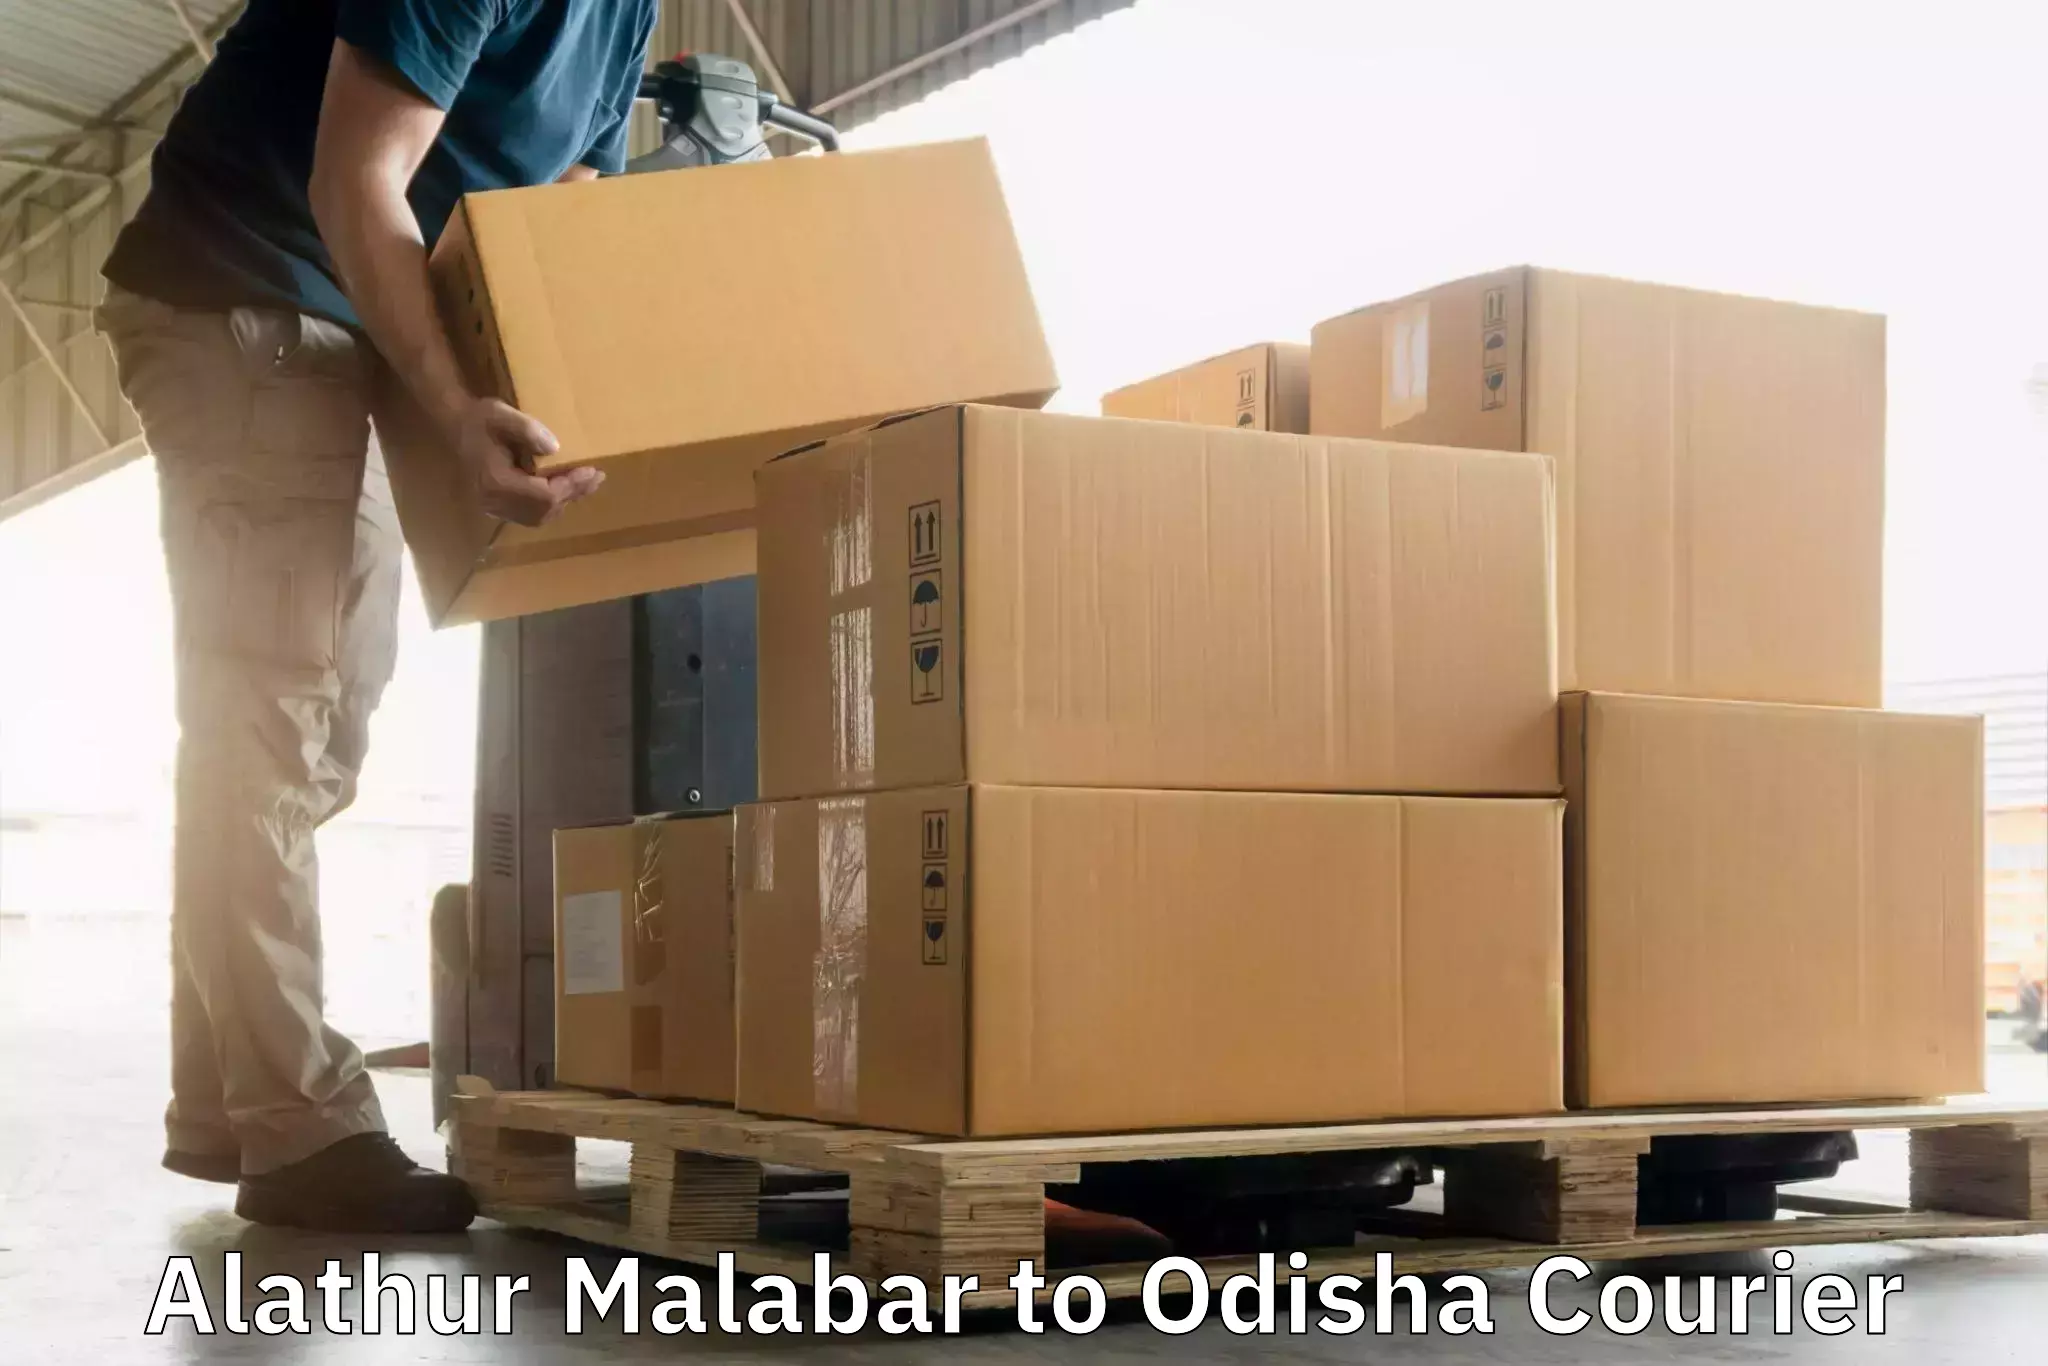 Courier service booking Alathur Malabar to Konark